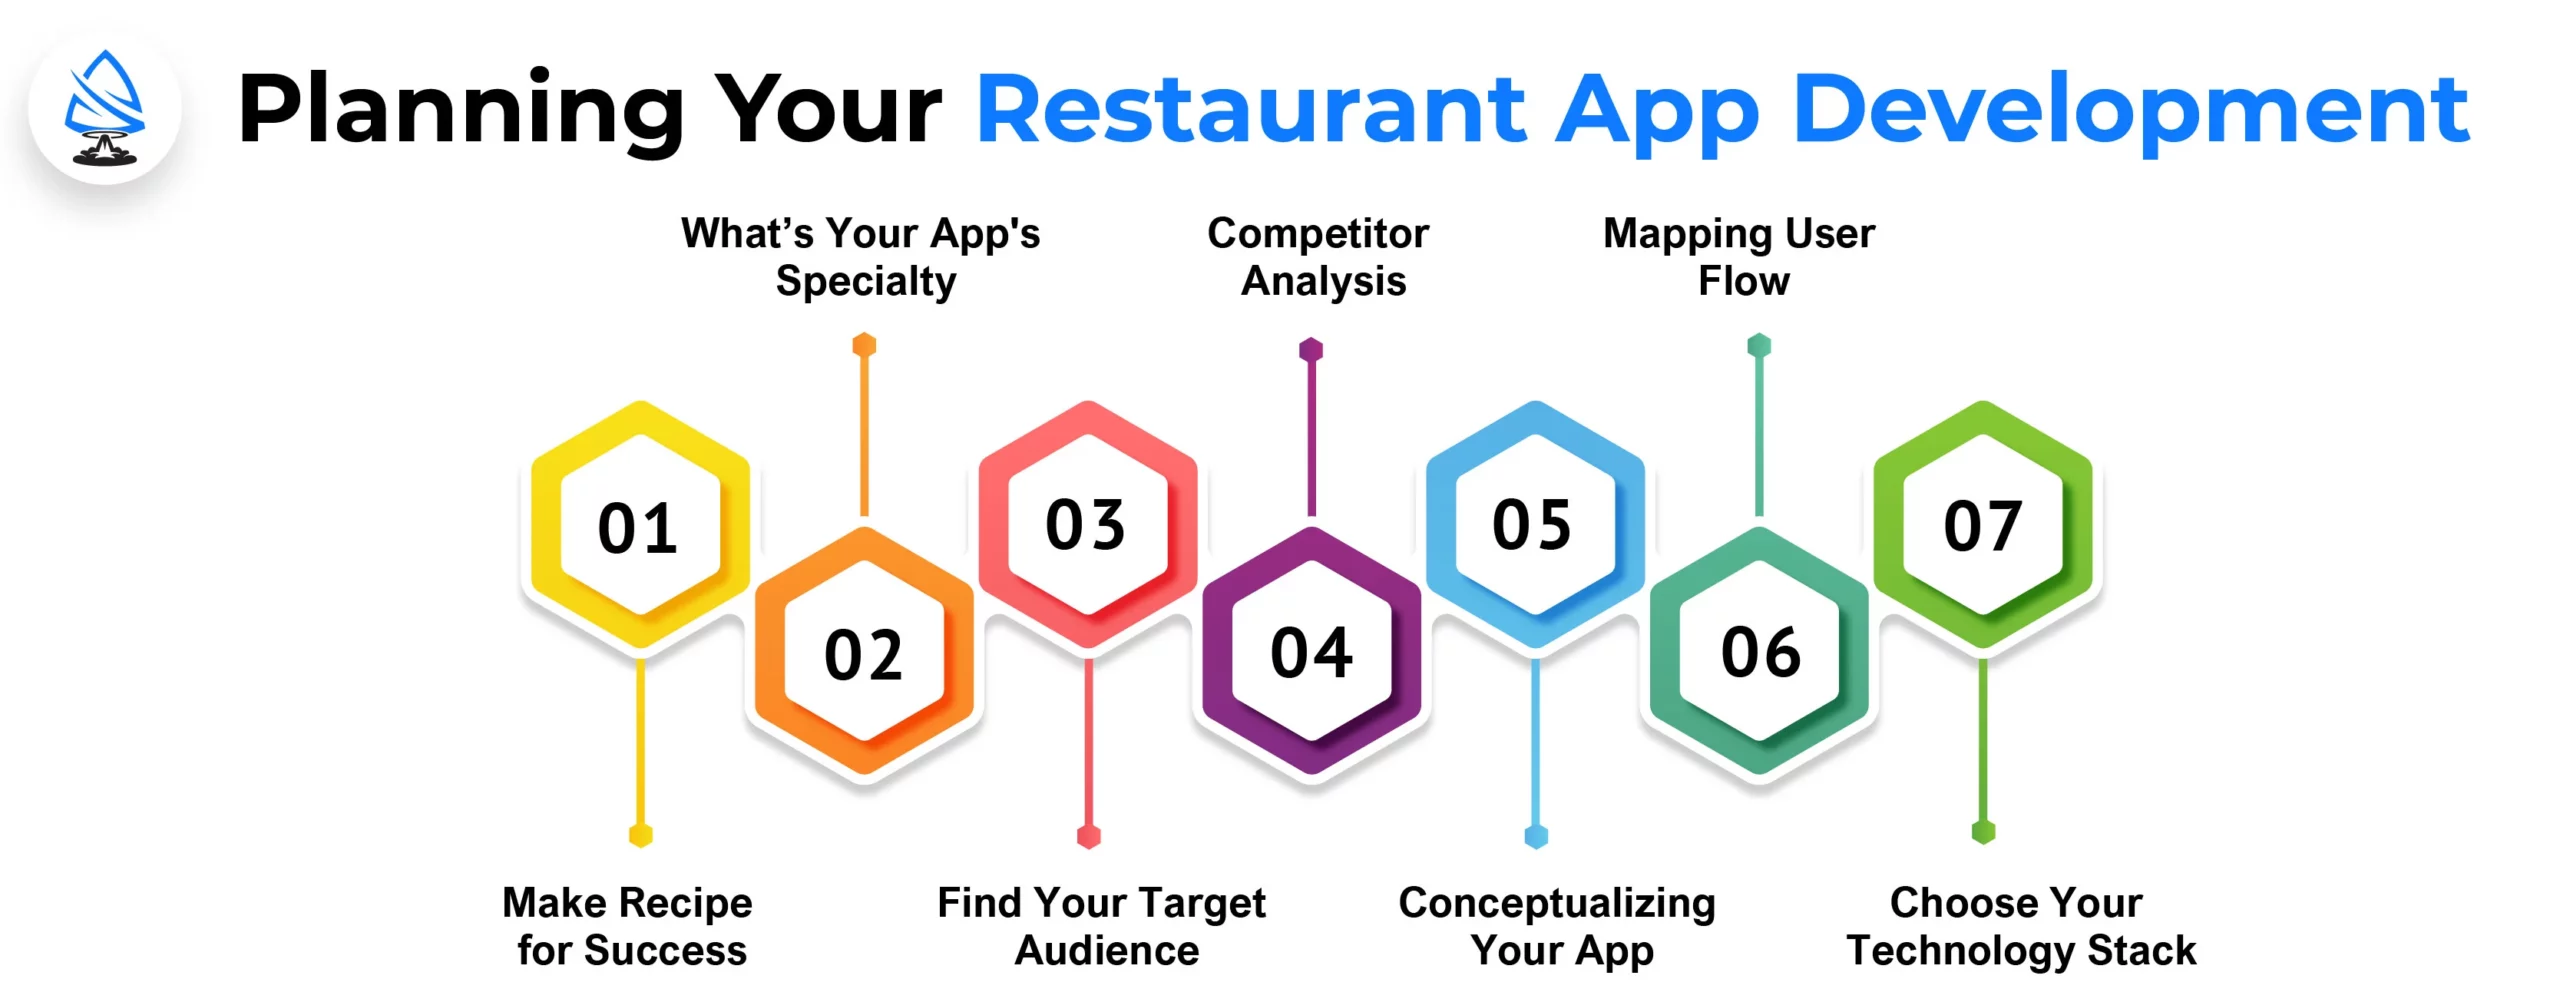 Planning Your Restaurant App Development